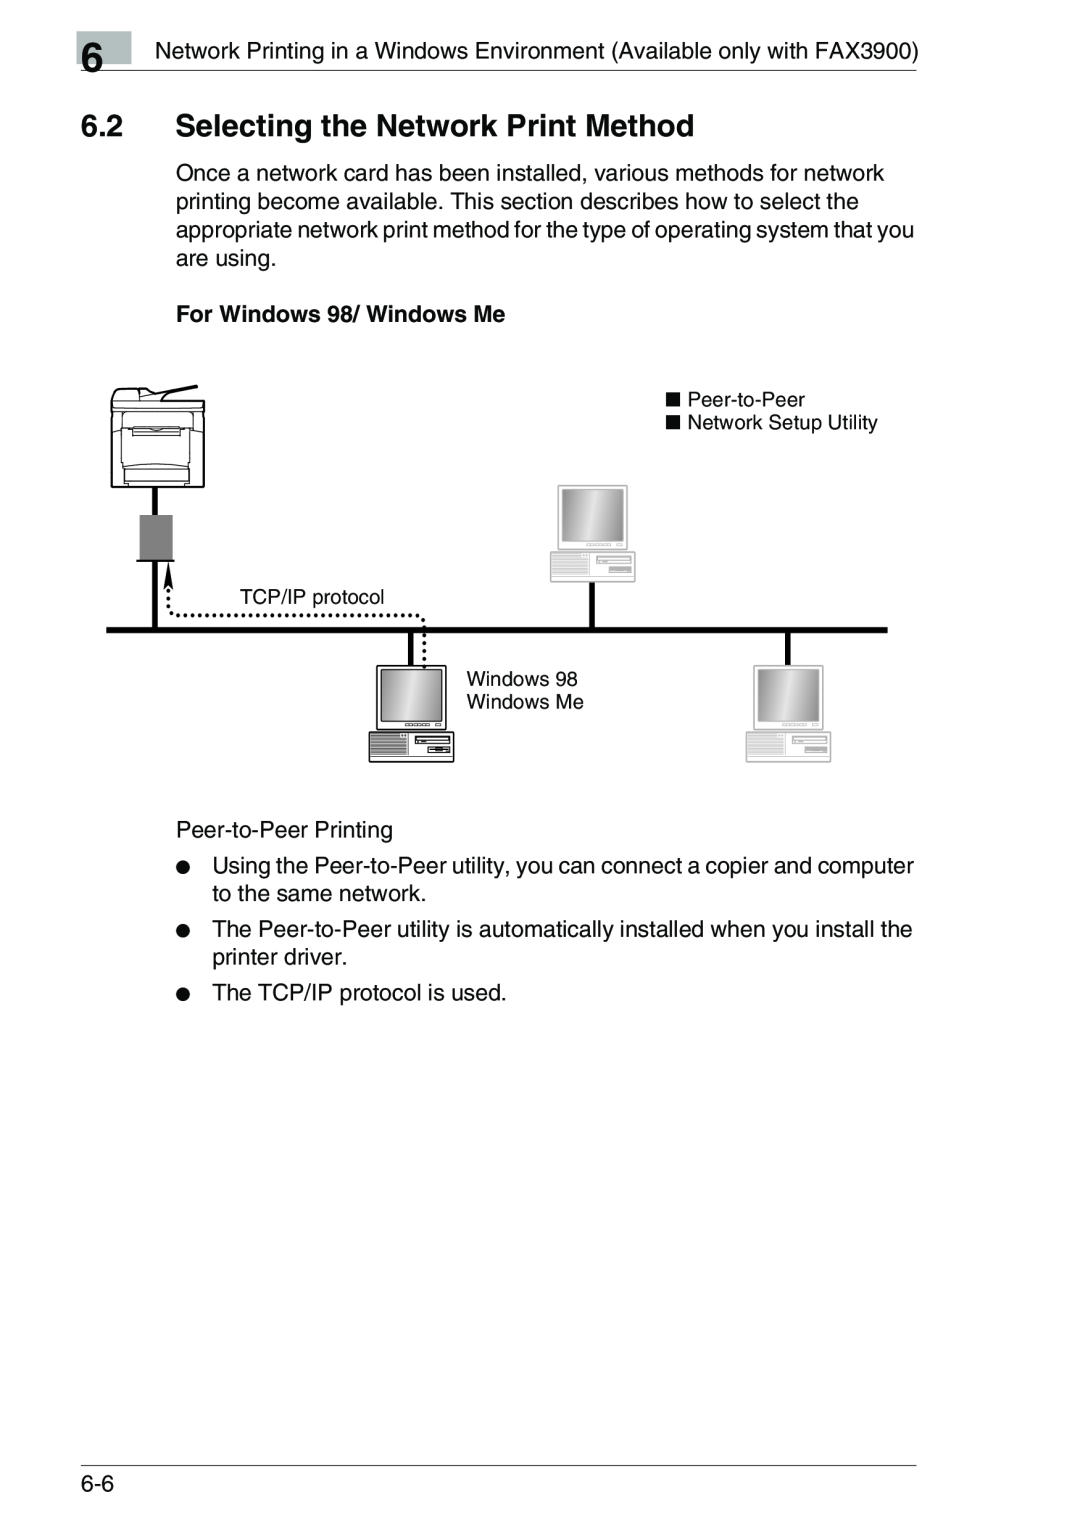 Konica Minolta FAX2900/FAX3900 manual Selecting the Network Print Method, For Windows 98/ Windows Me 